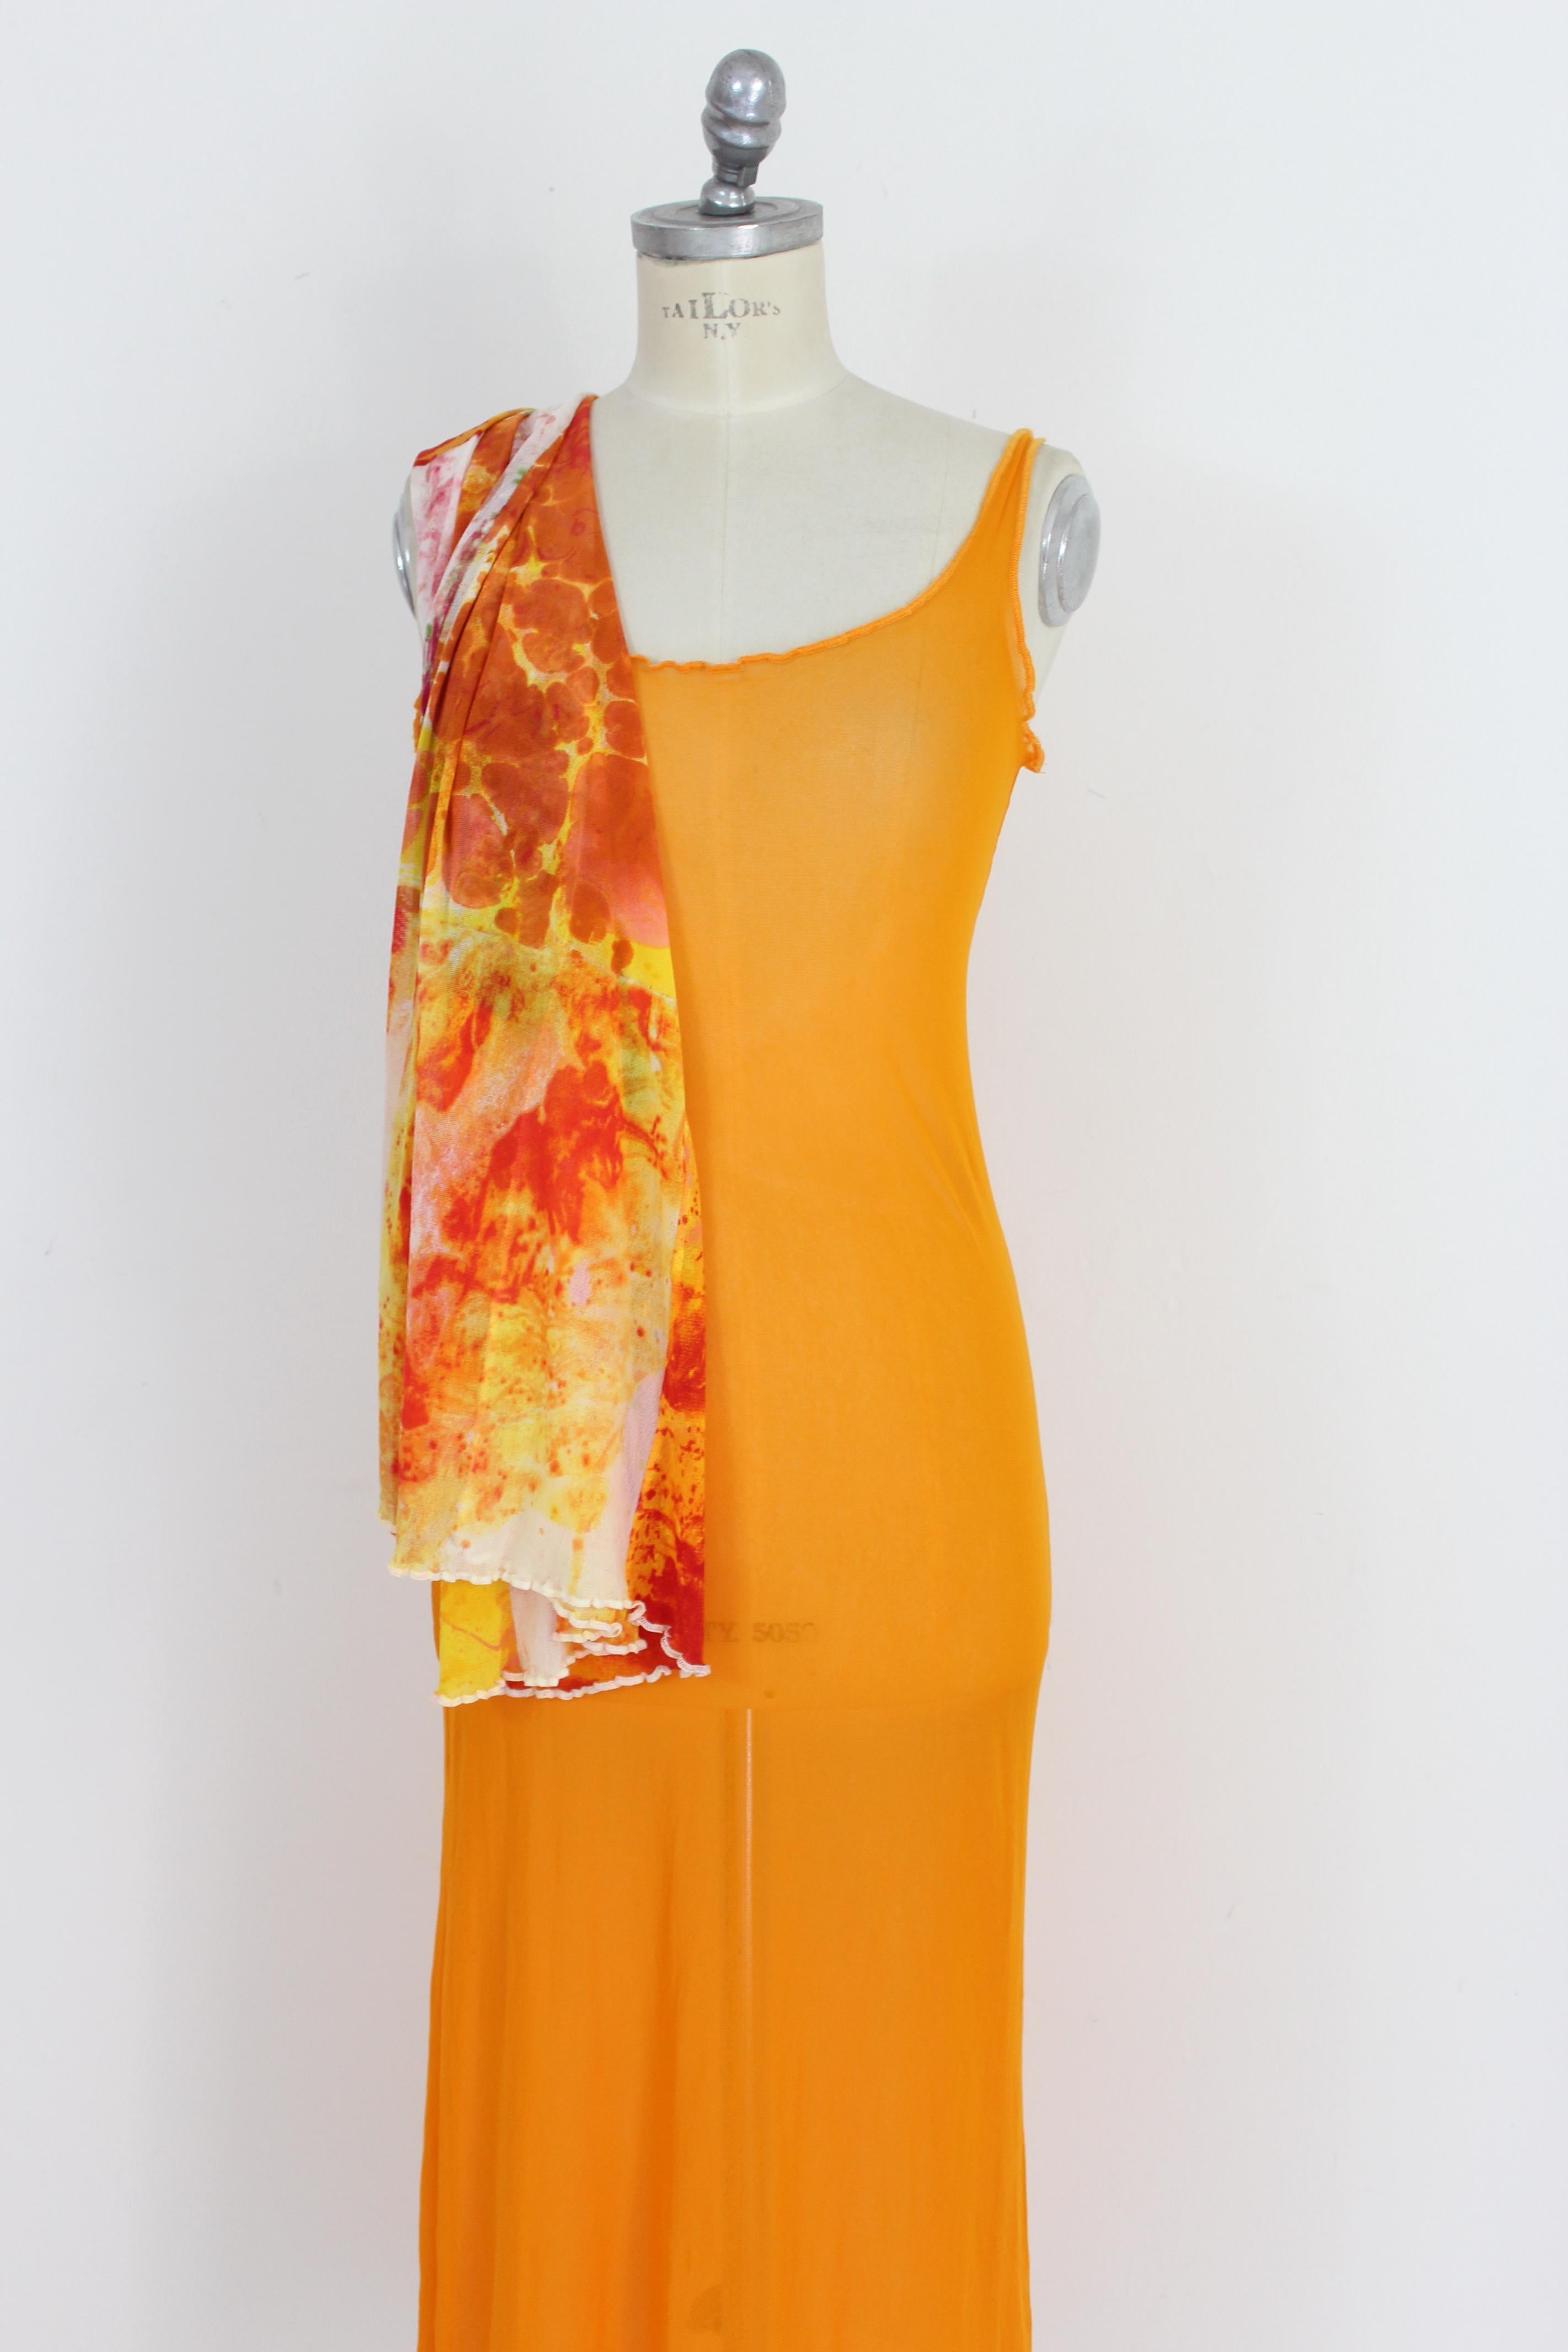 Women's Jean Paul Gaultier Soleil Orange Floral Cocktail Long Fitted Dress 1990s